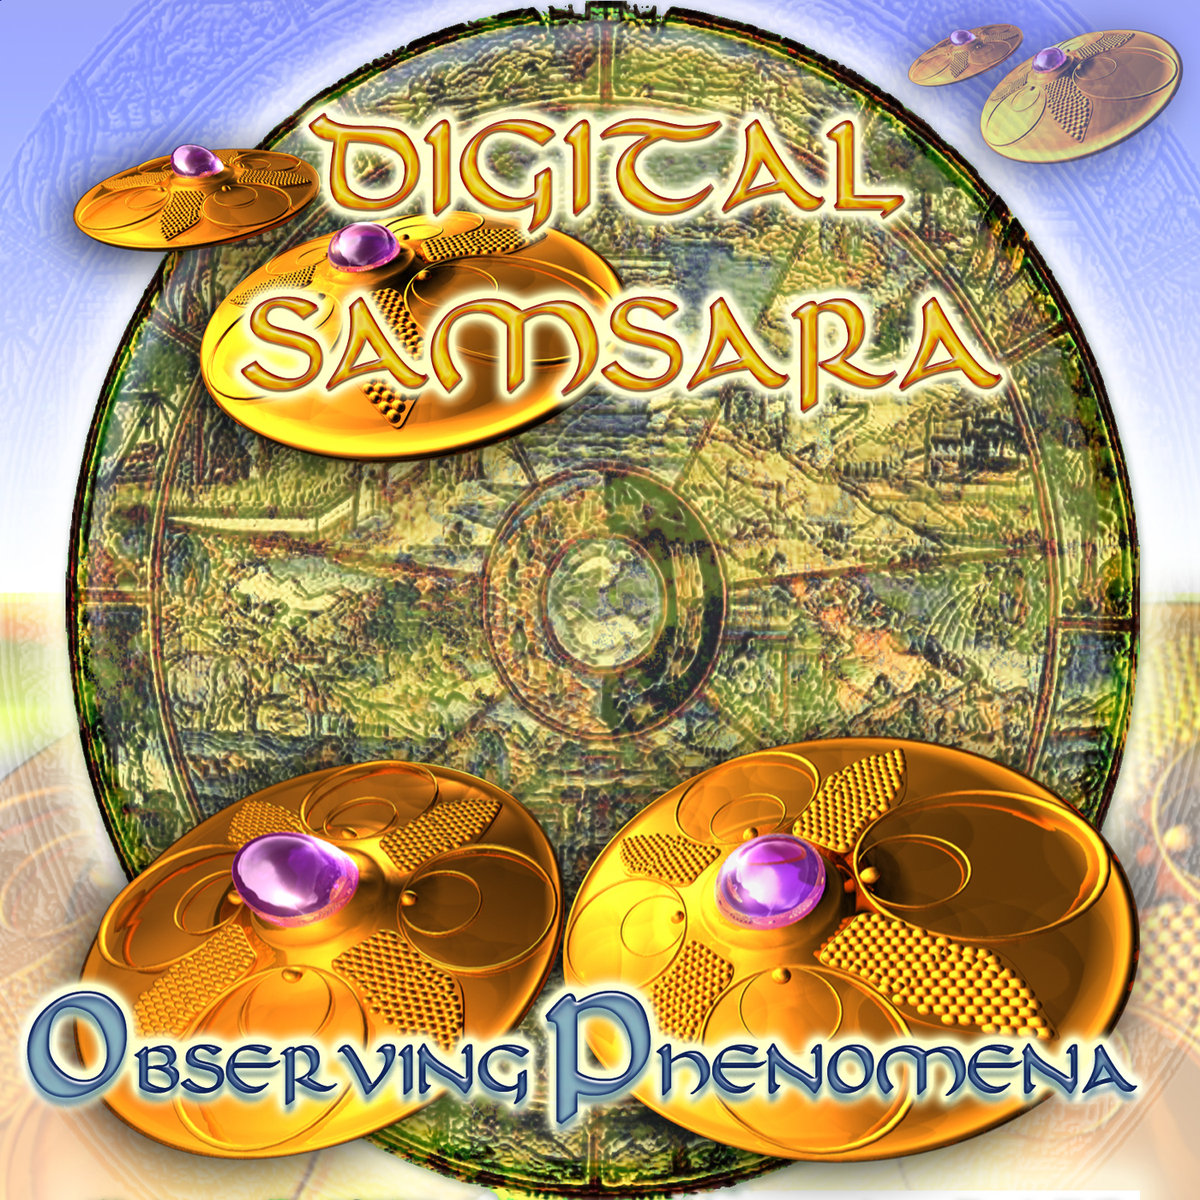 Digital Samsara - General Exeption @ 'Observing Phenomena' album (electronic, goa)